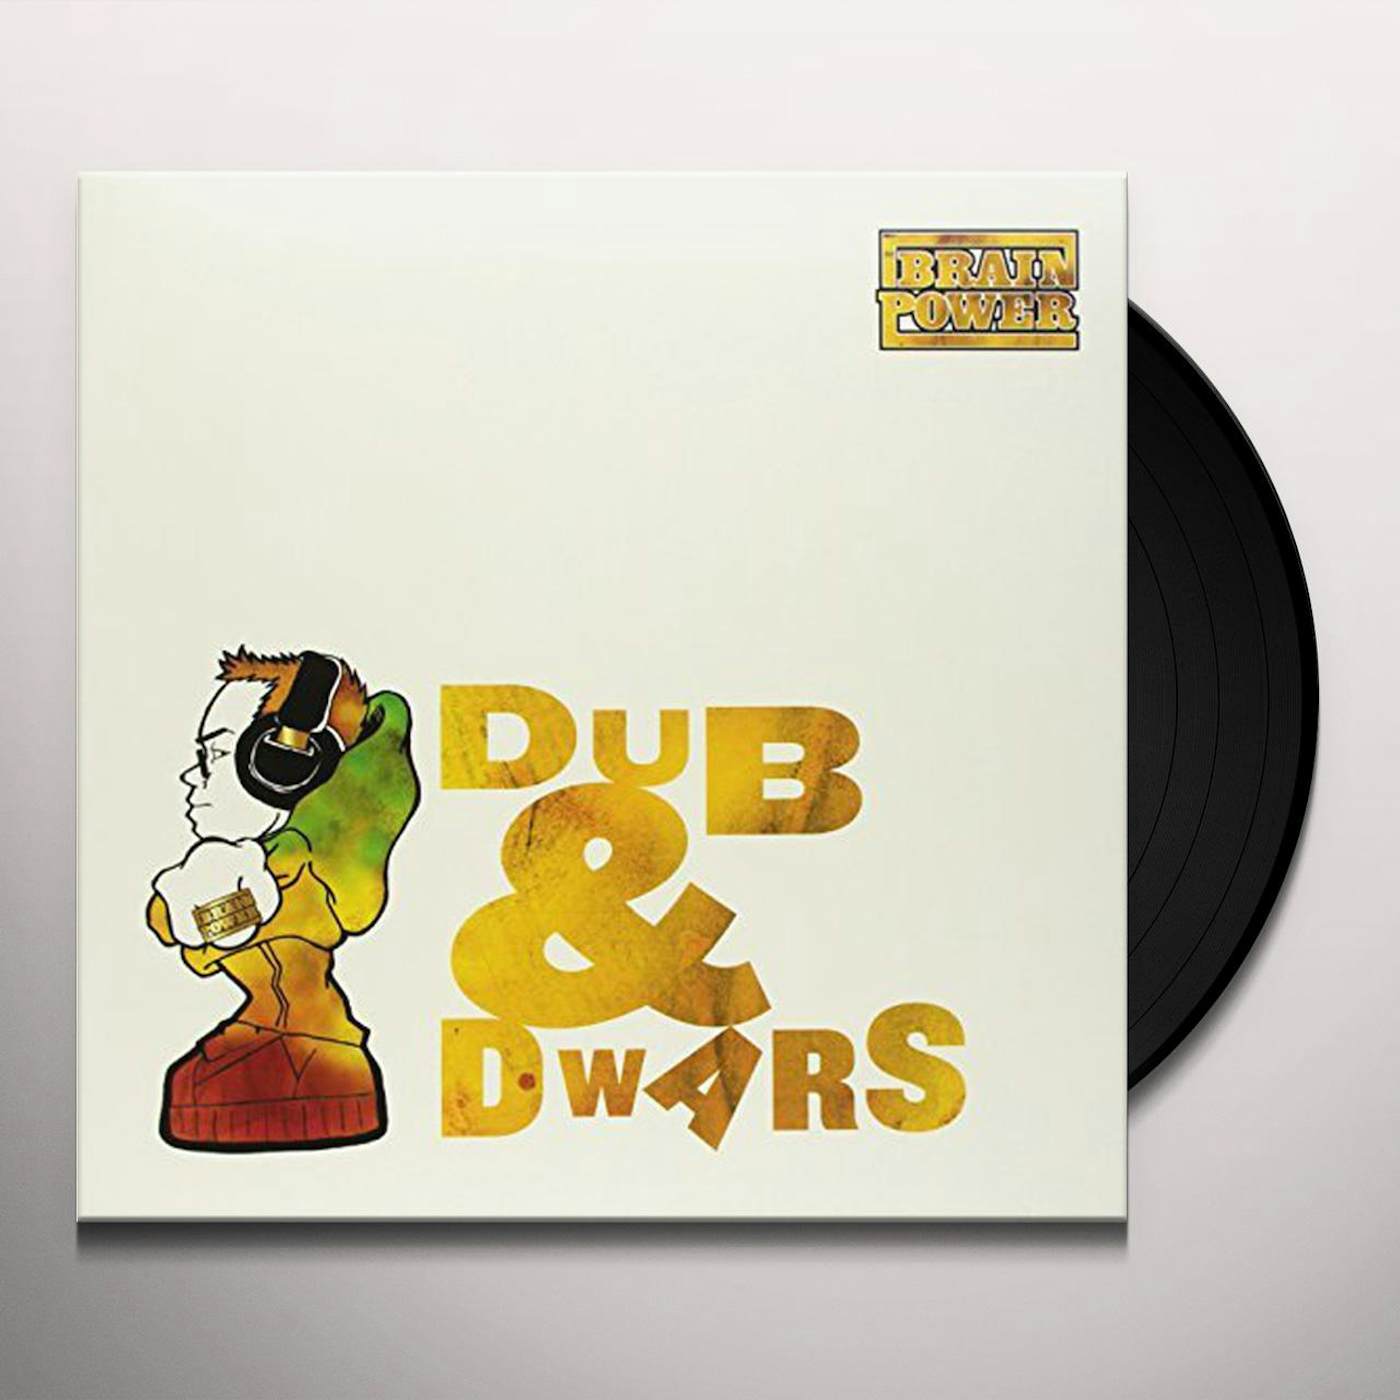 Brainpower Dub & dwars Vinyl Record